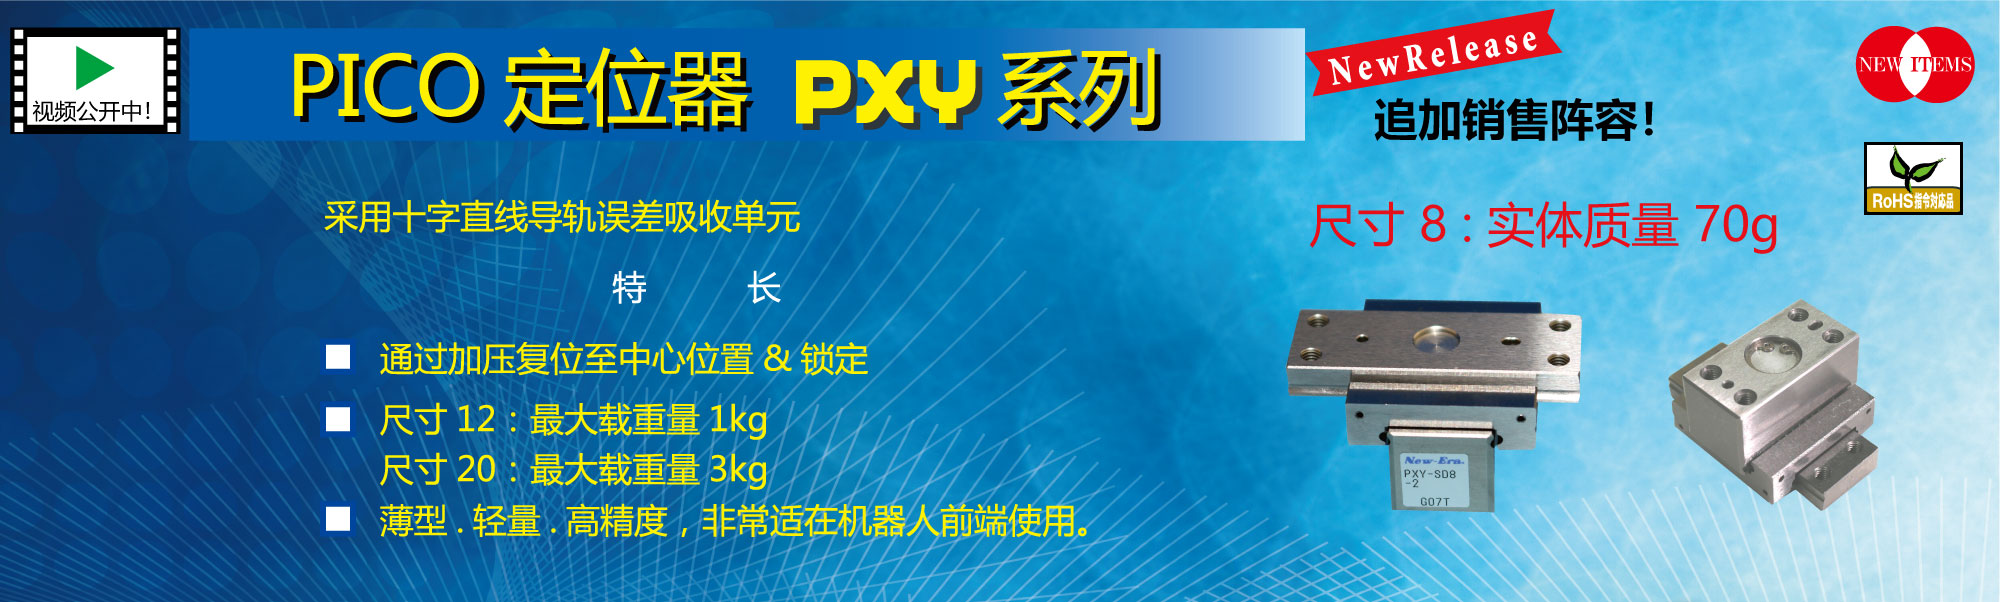 PXY 系列 Pico 定位器